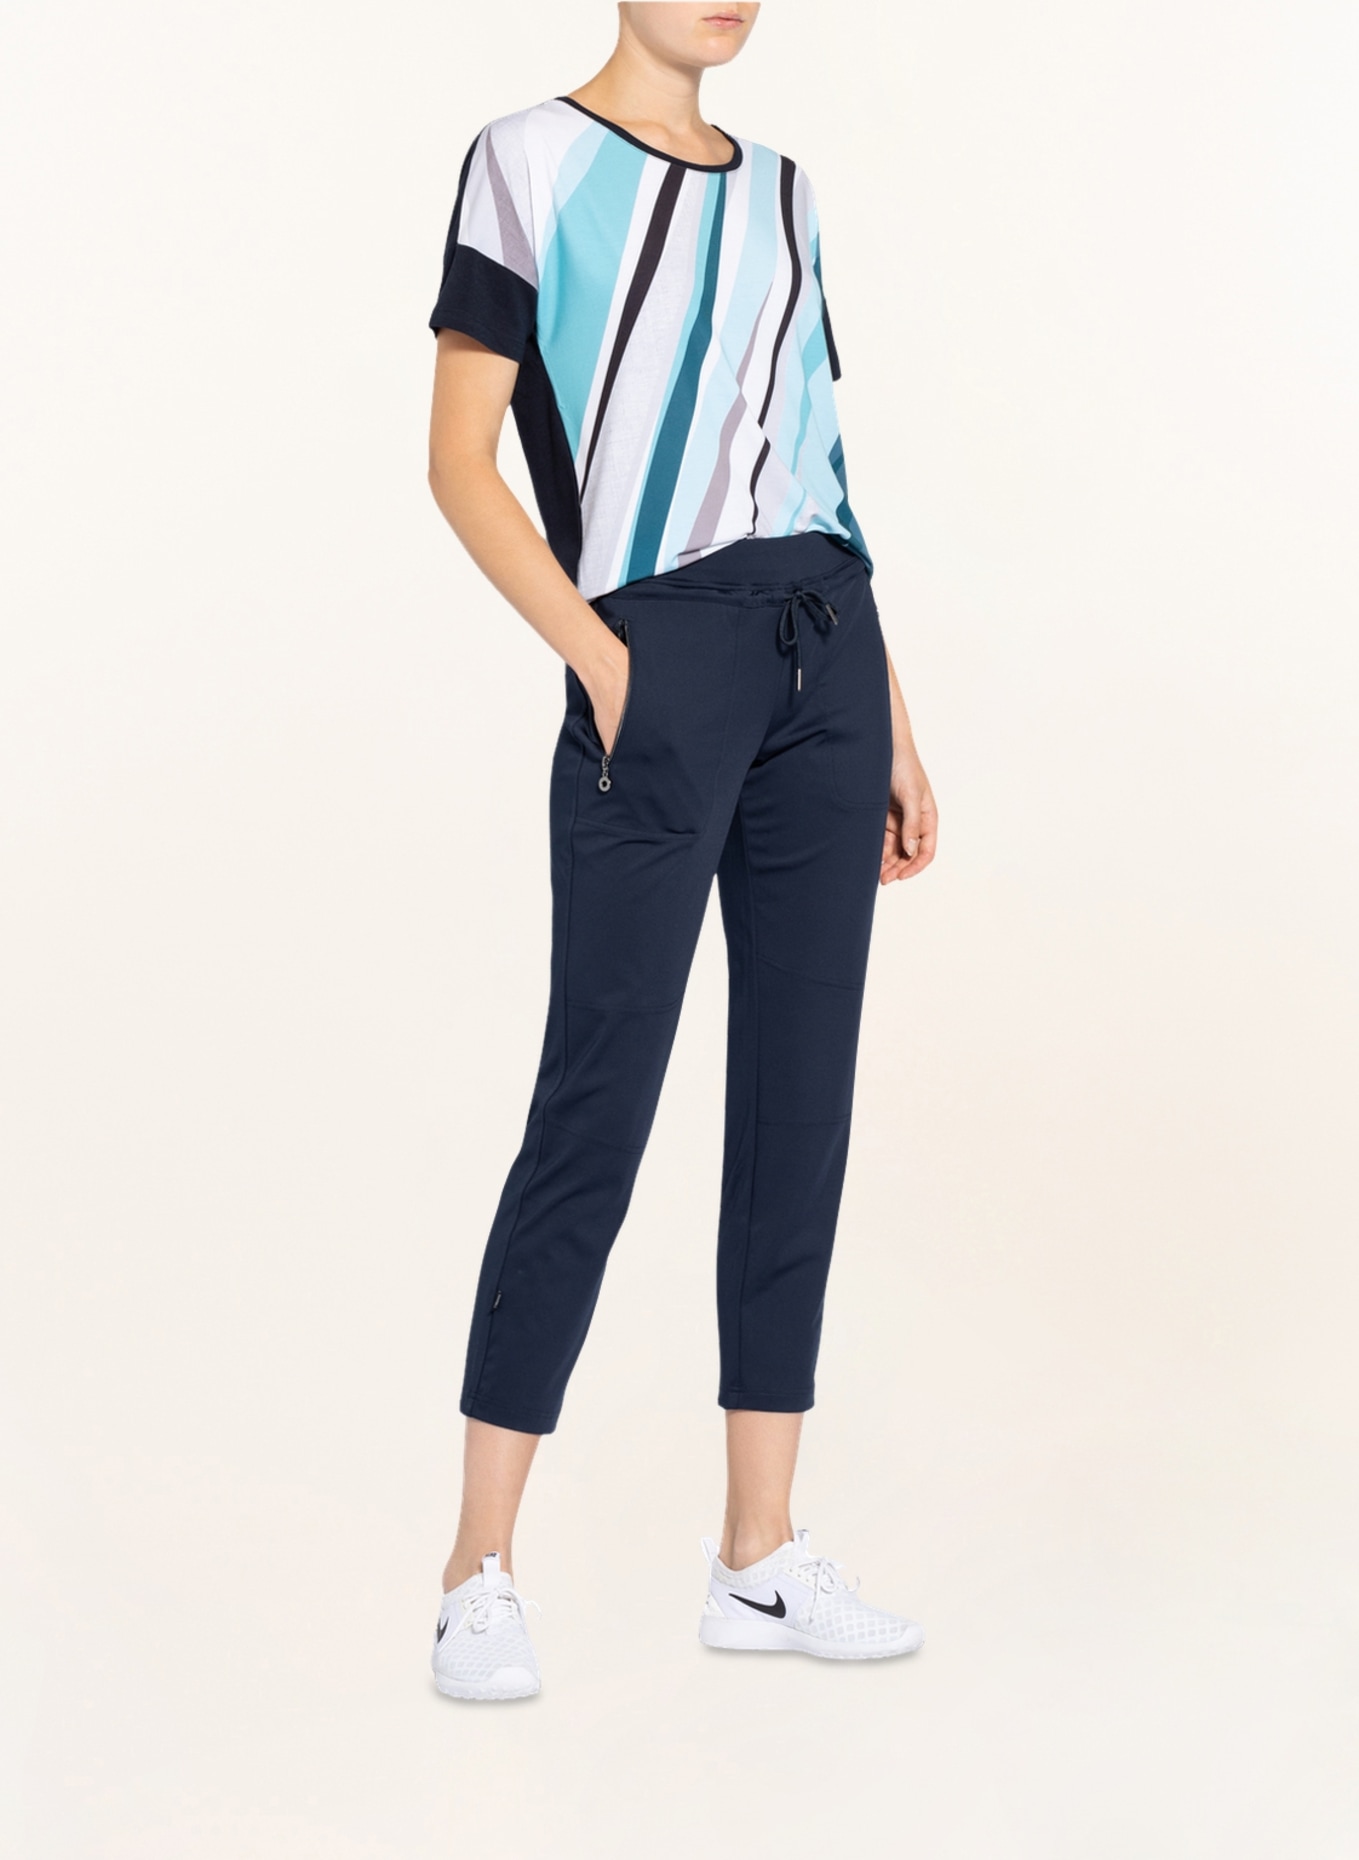 JOY sportswear 7/8 training pants TAMARA, Color: DARK BLUE (Image 2)